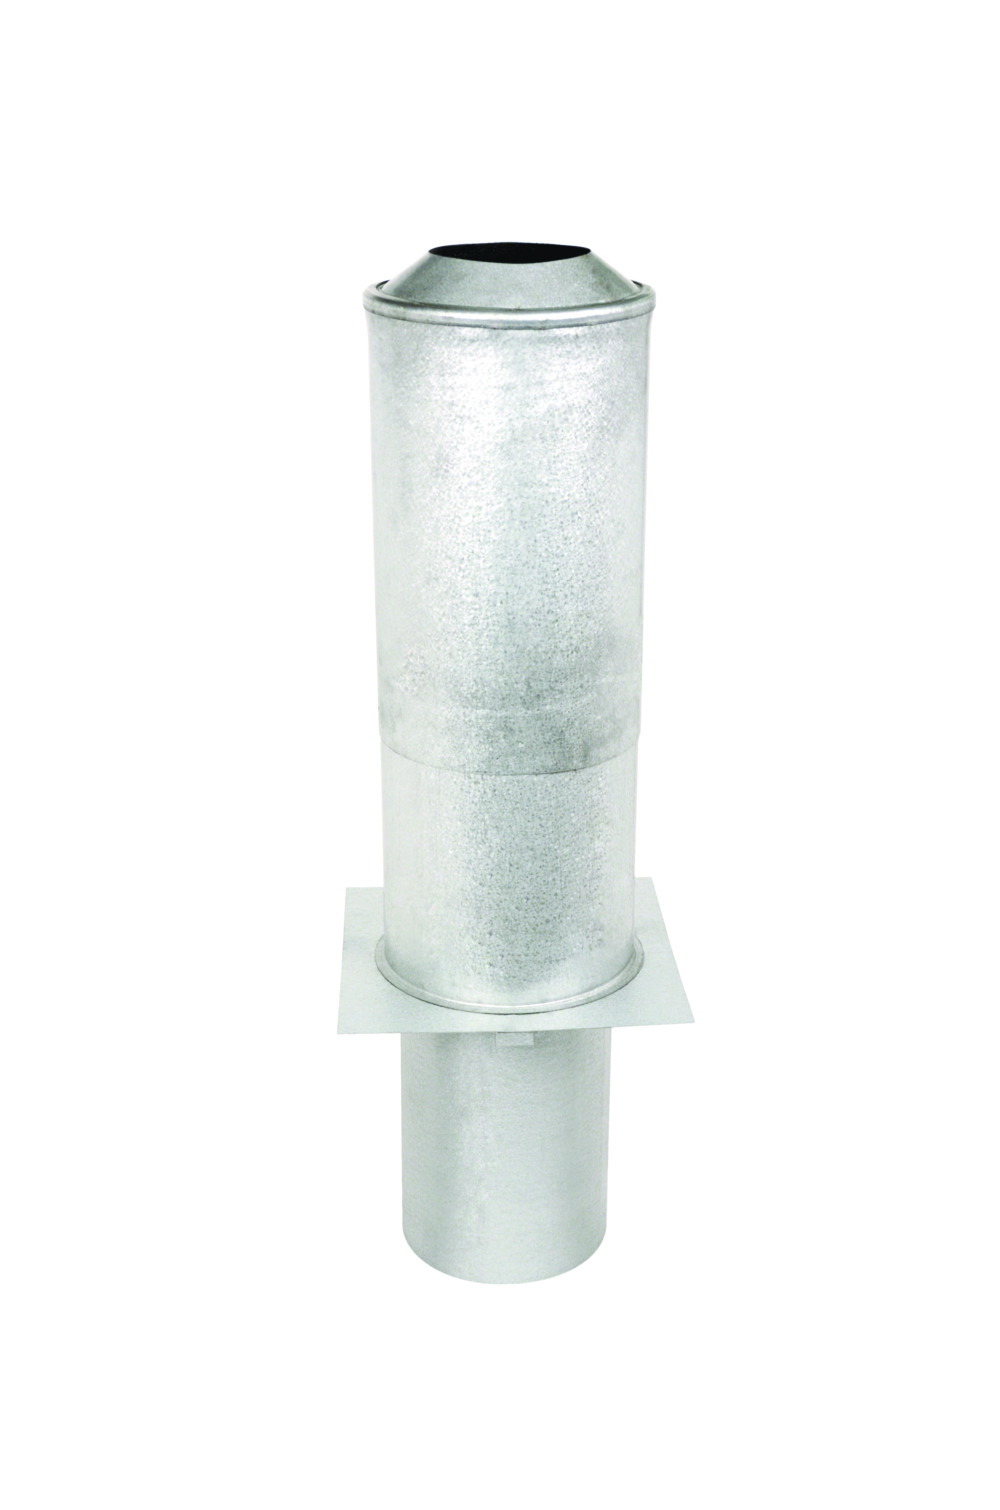  Metalbest Pellet Pipe Insulated Type L Chimney Adapter  Galvanized, 3x 8 : Patio, Lawn & Garden